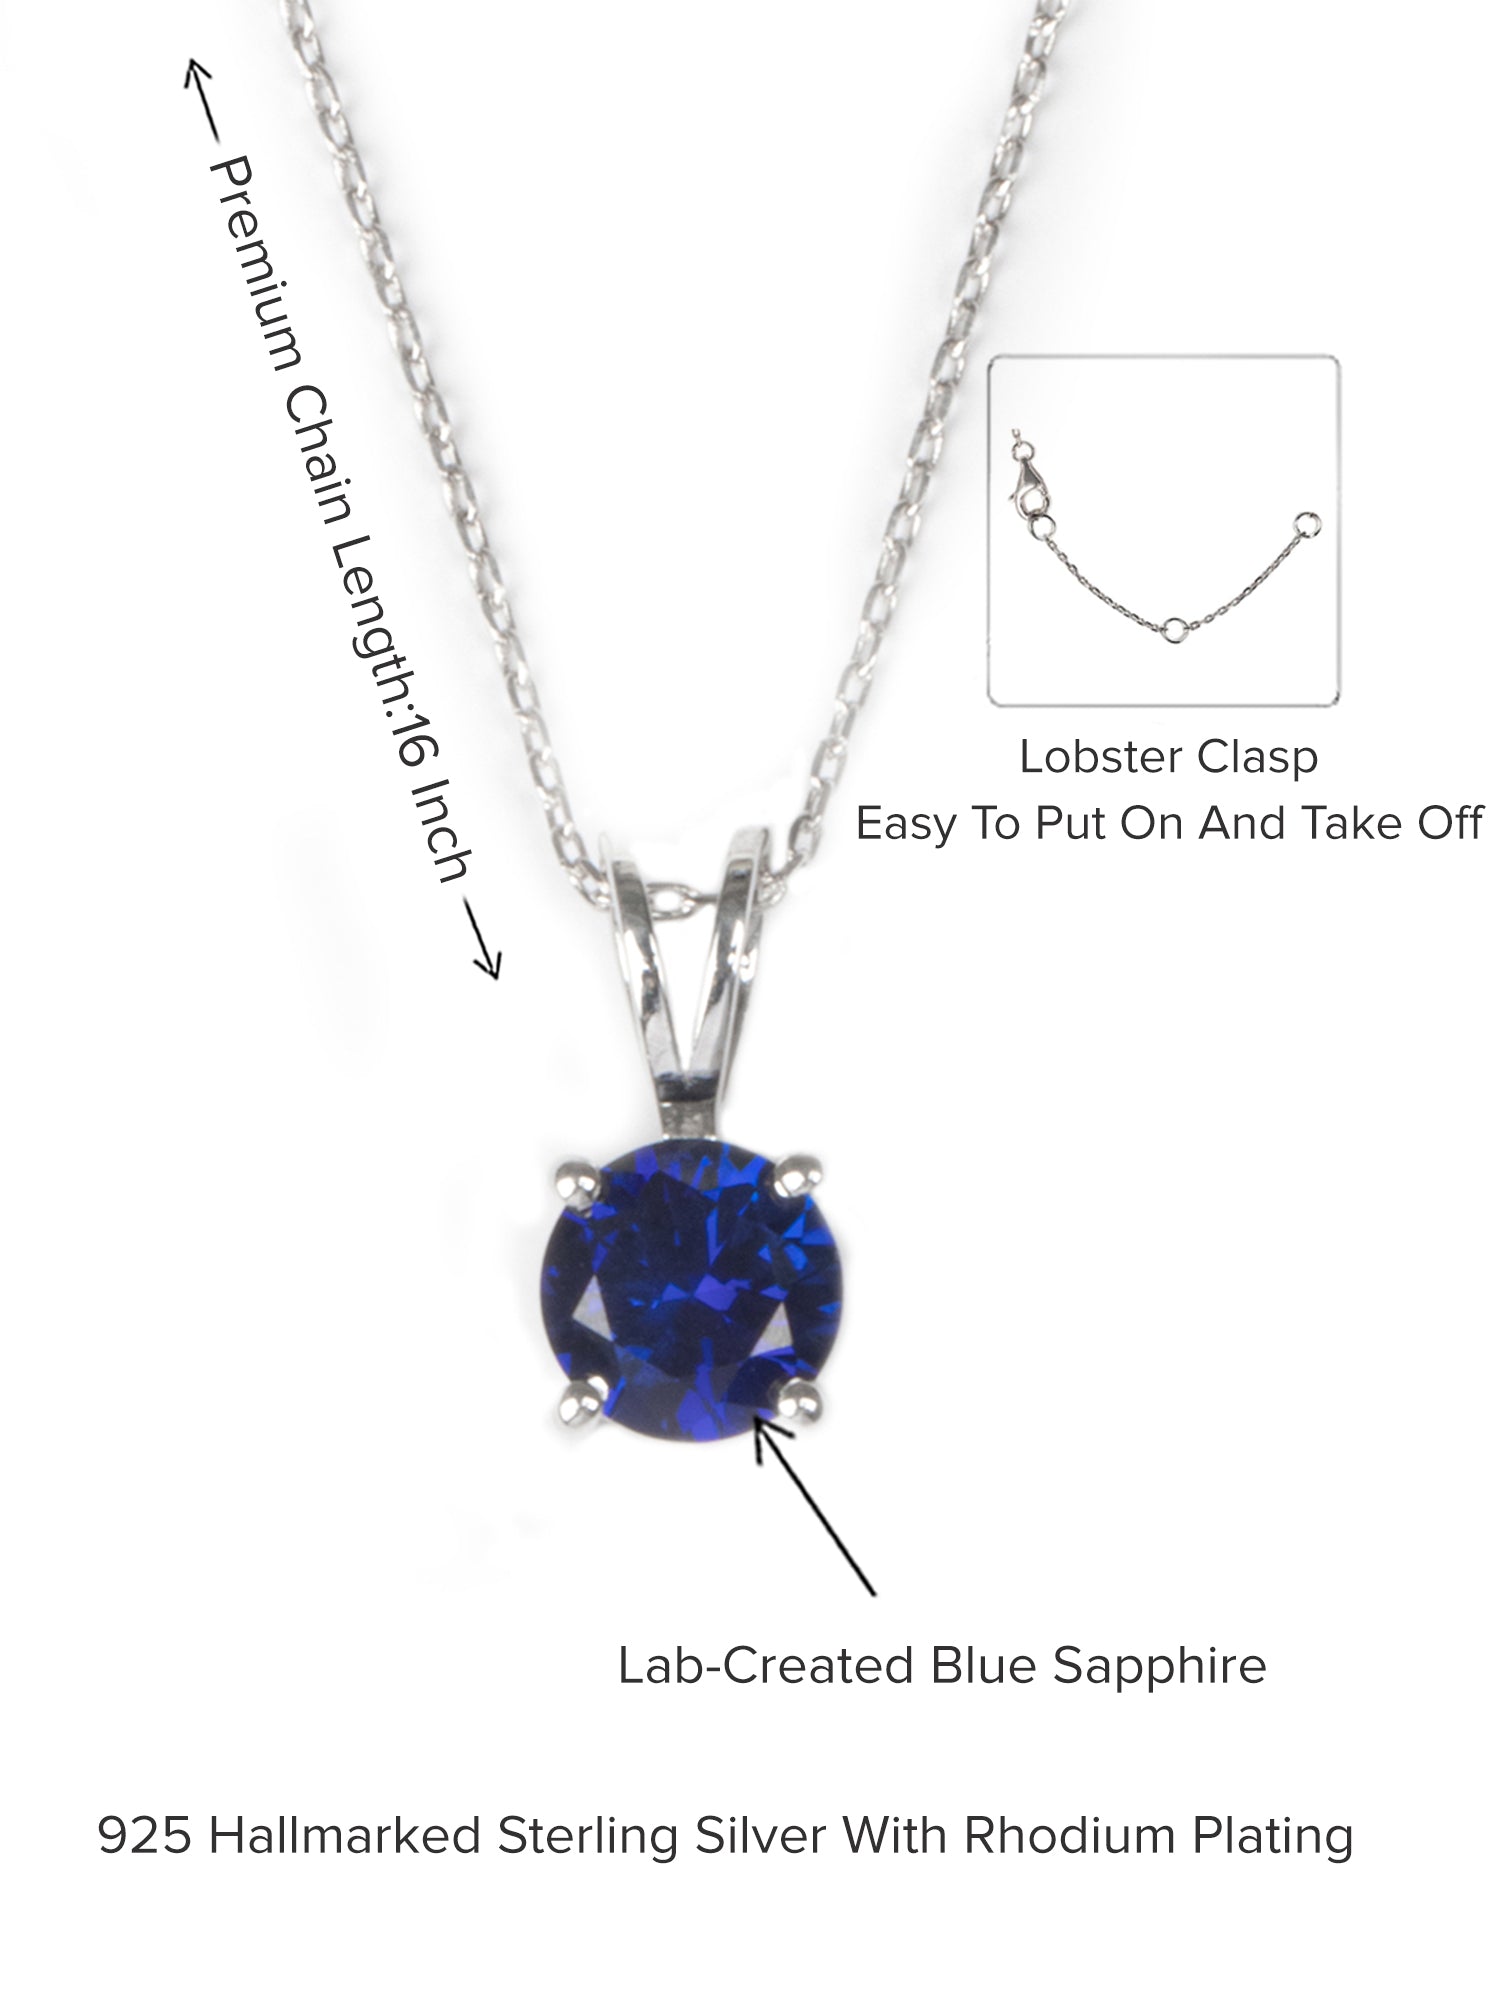 Blue Sapphire Solitaire Necklace For Women